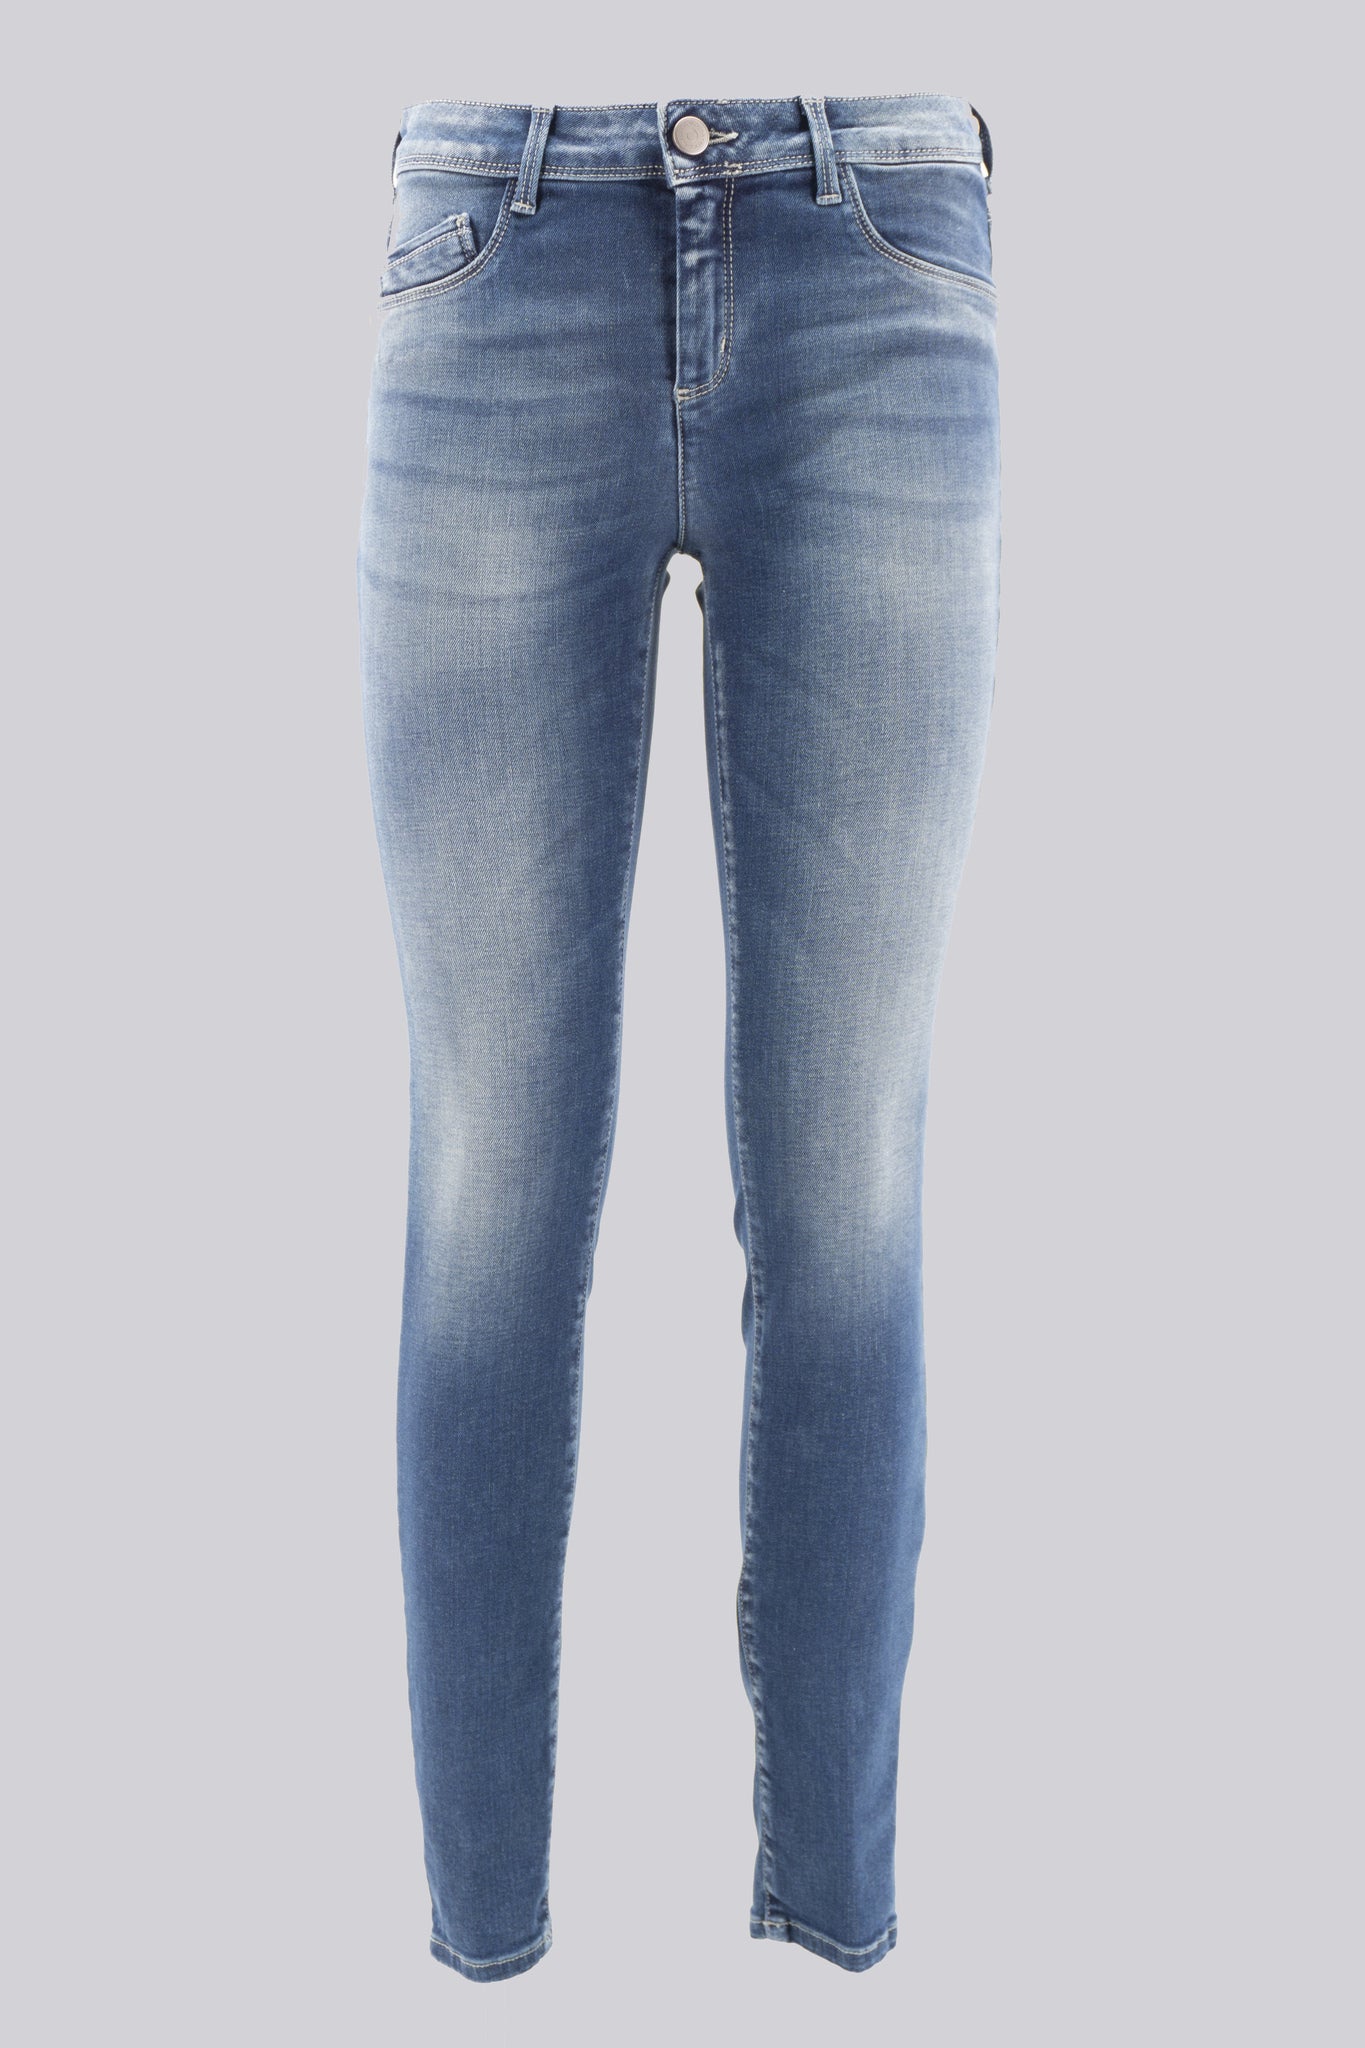 Jeans Modello Skinny / Jeans - Ideal Moda